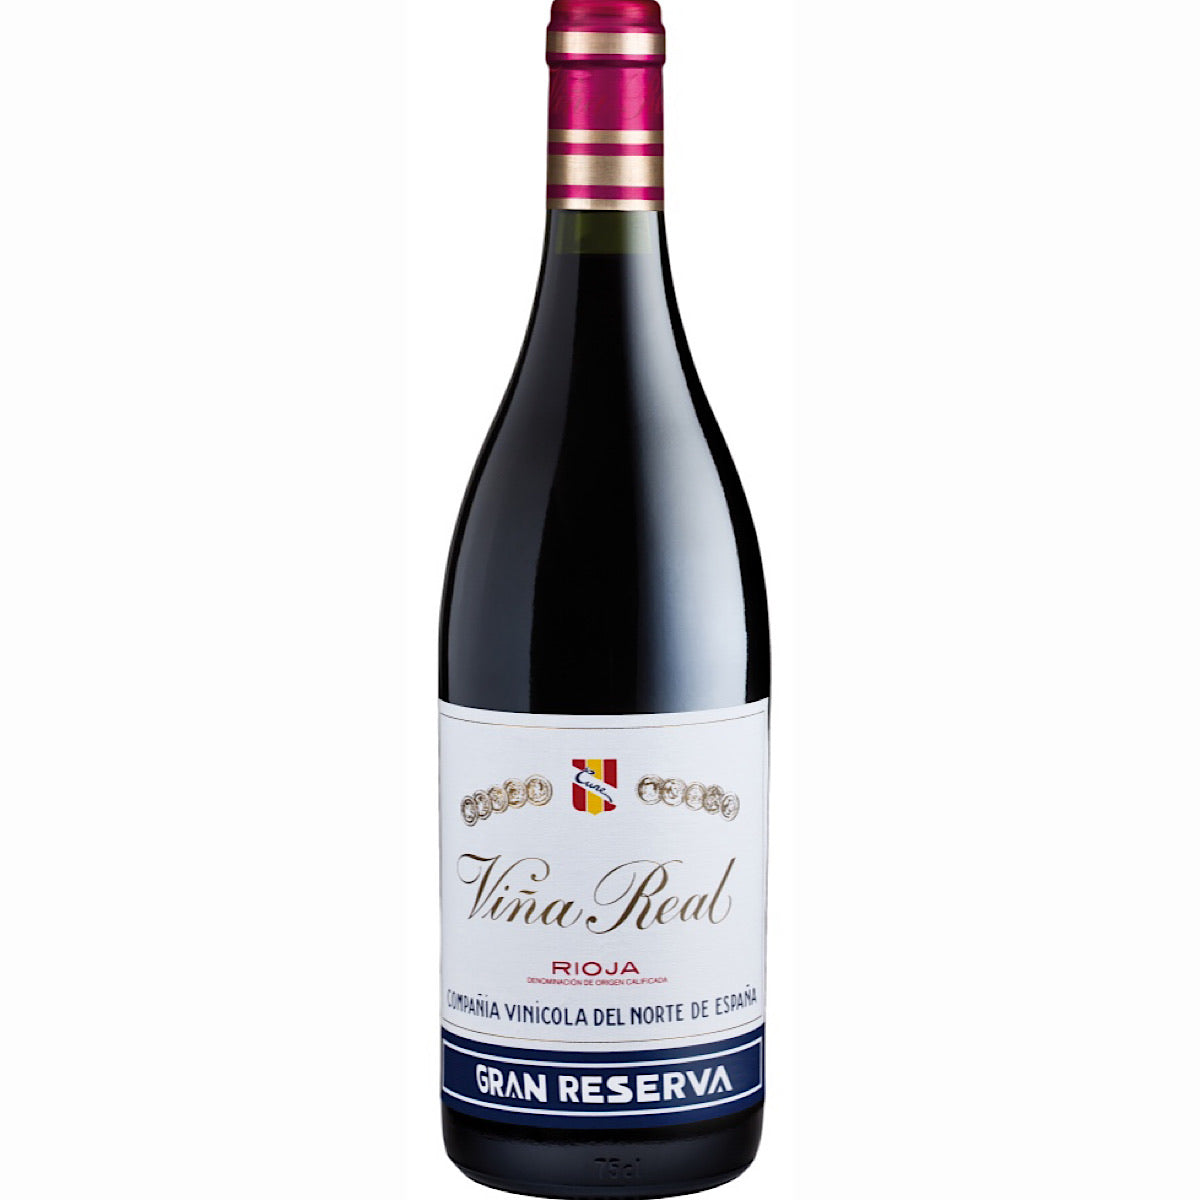 Real gran. Вино Винья Реал. Reserva 2017 вино Rioja. Вино Vina real, reserva, 2015. Вино вино красное сухое 0 75л Испания.